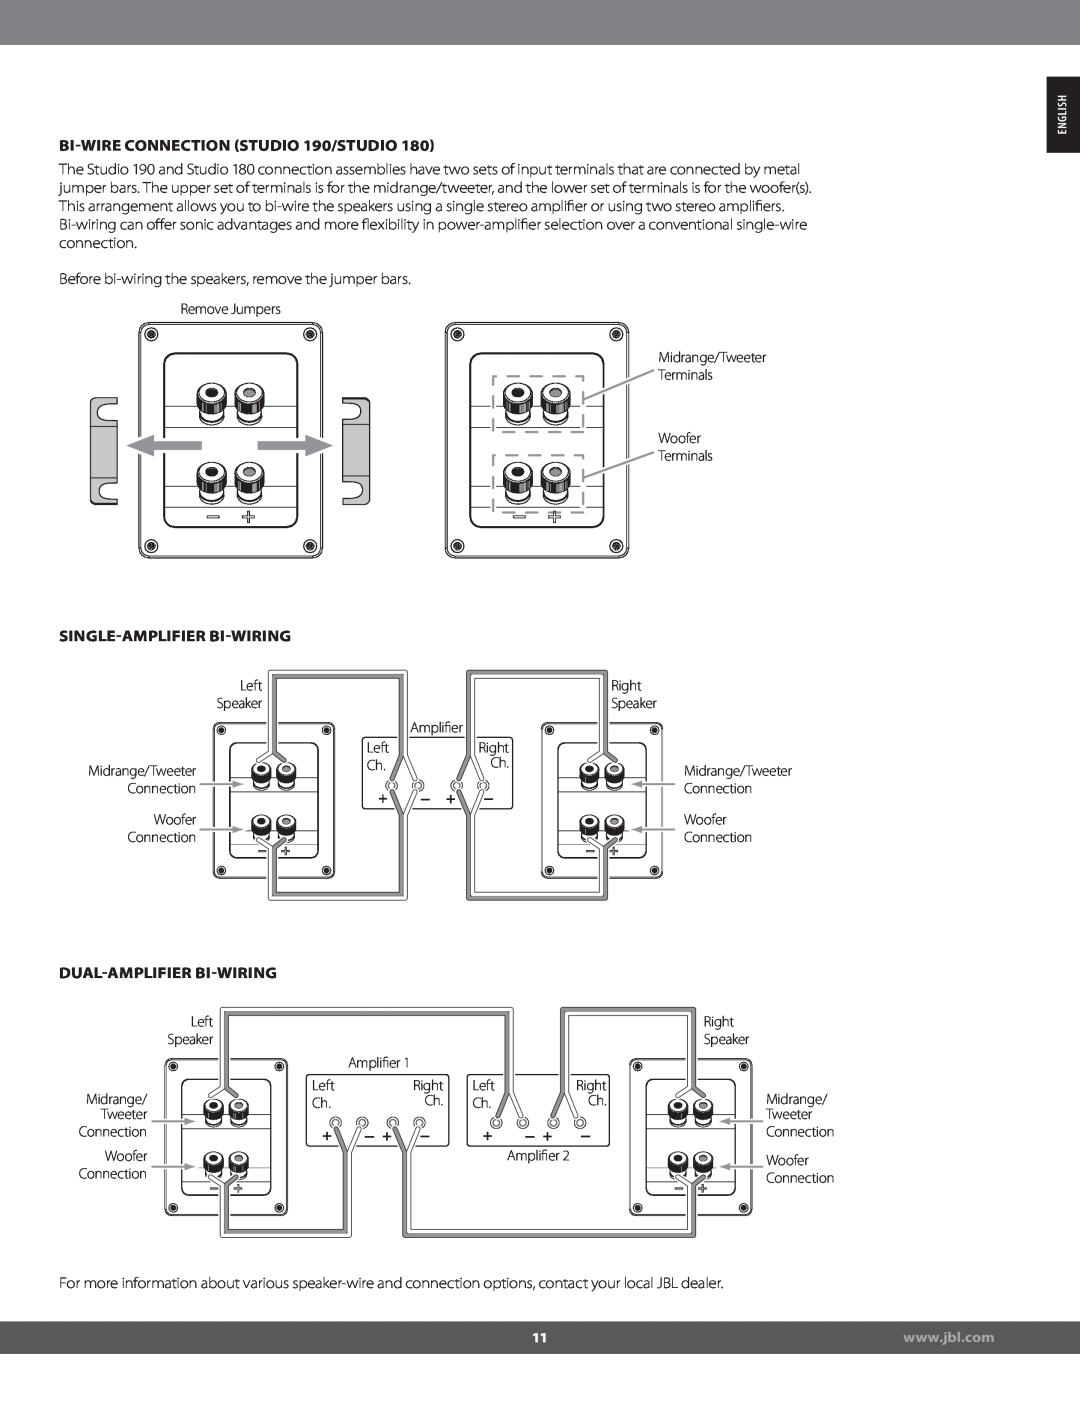 JBL STUDIO180 manual BIWIRE CONNECTION STUDIO 190/STUDIO 180, Singleamplifier Biwiring, Dualamplifier Biwiring 